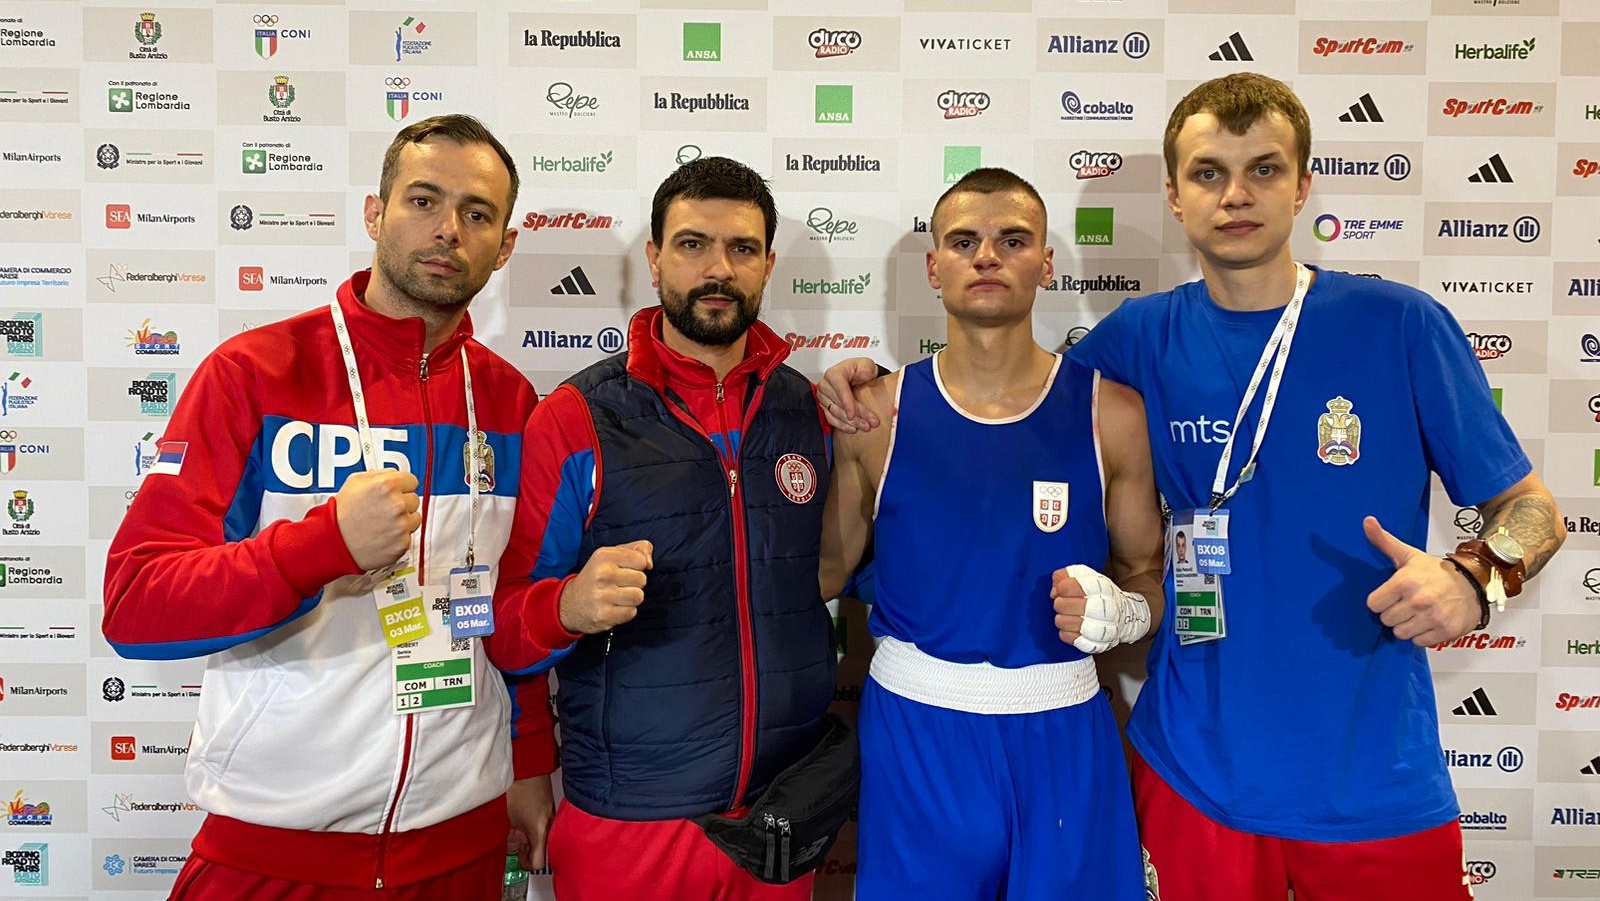 Velike šanse za nove olimpijske vize srpskog boksa u Busto Arsiciju